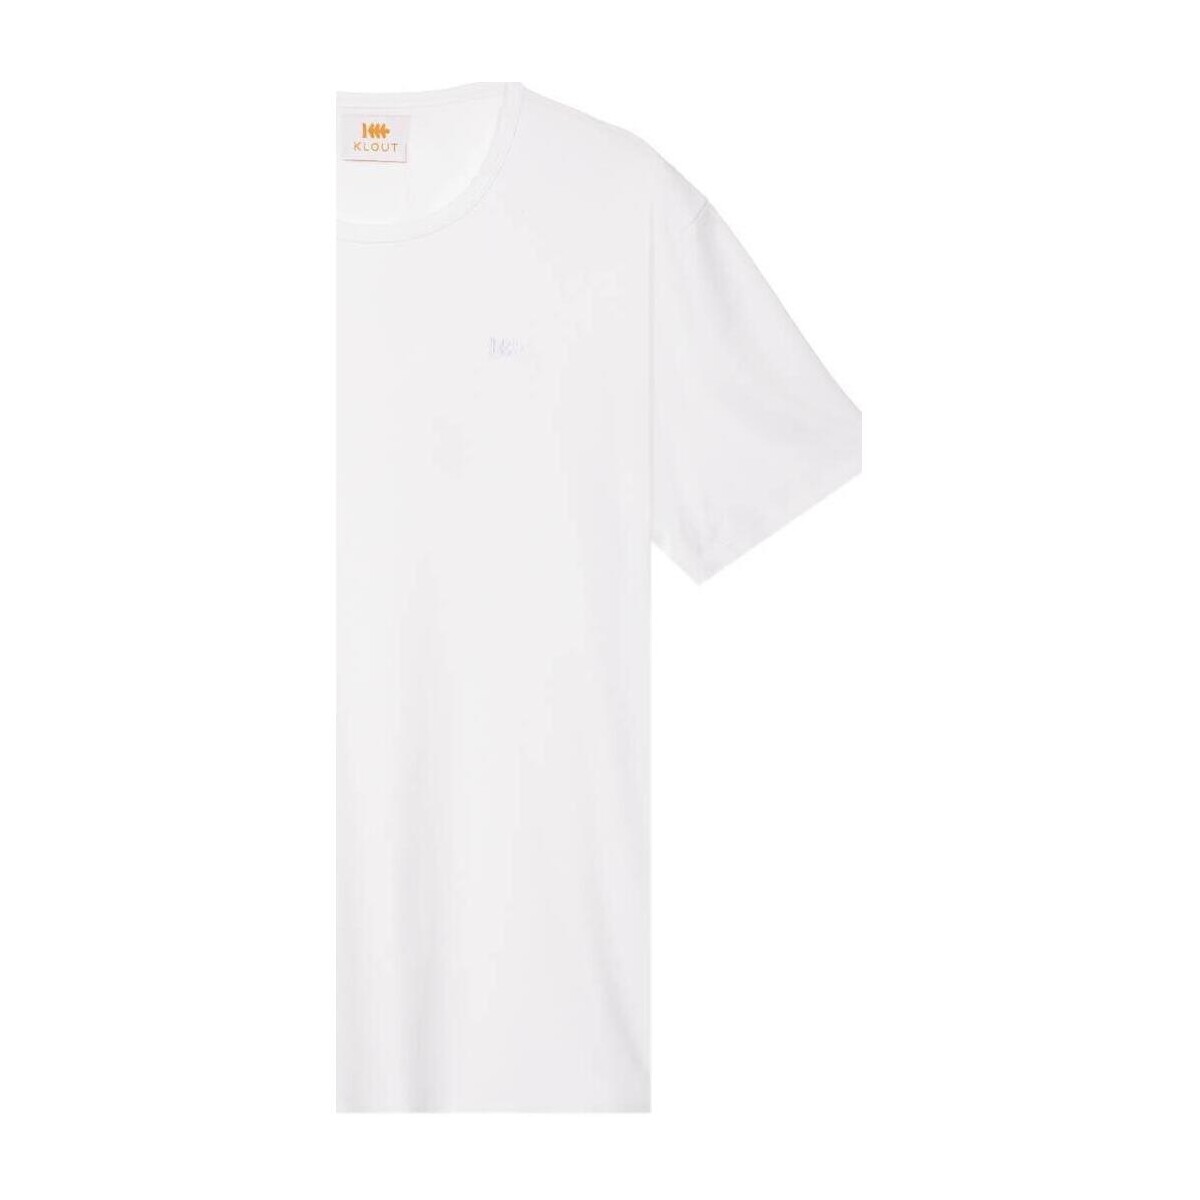 Kleidung T-Shirts Klout  Weiss